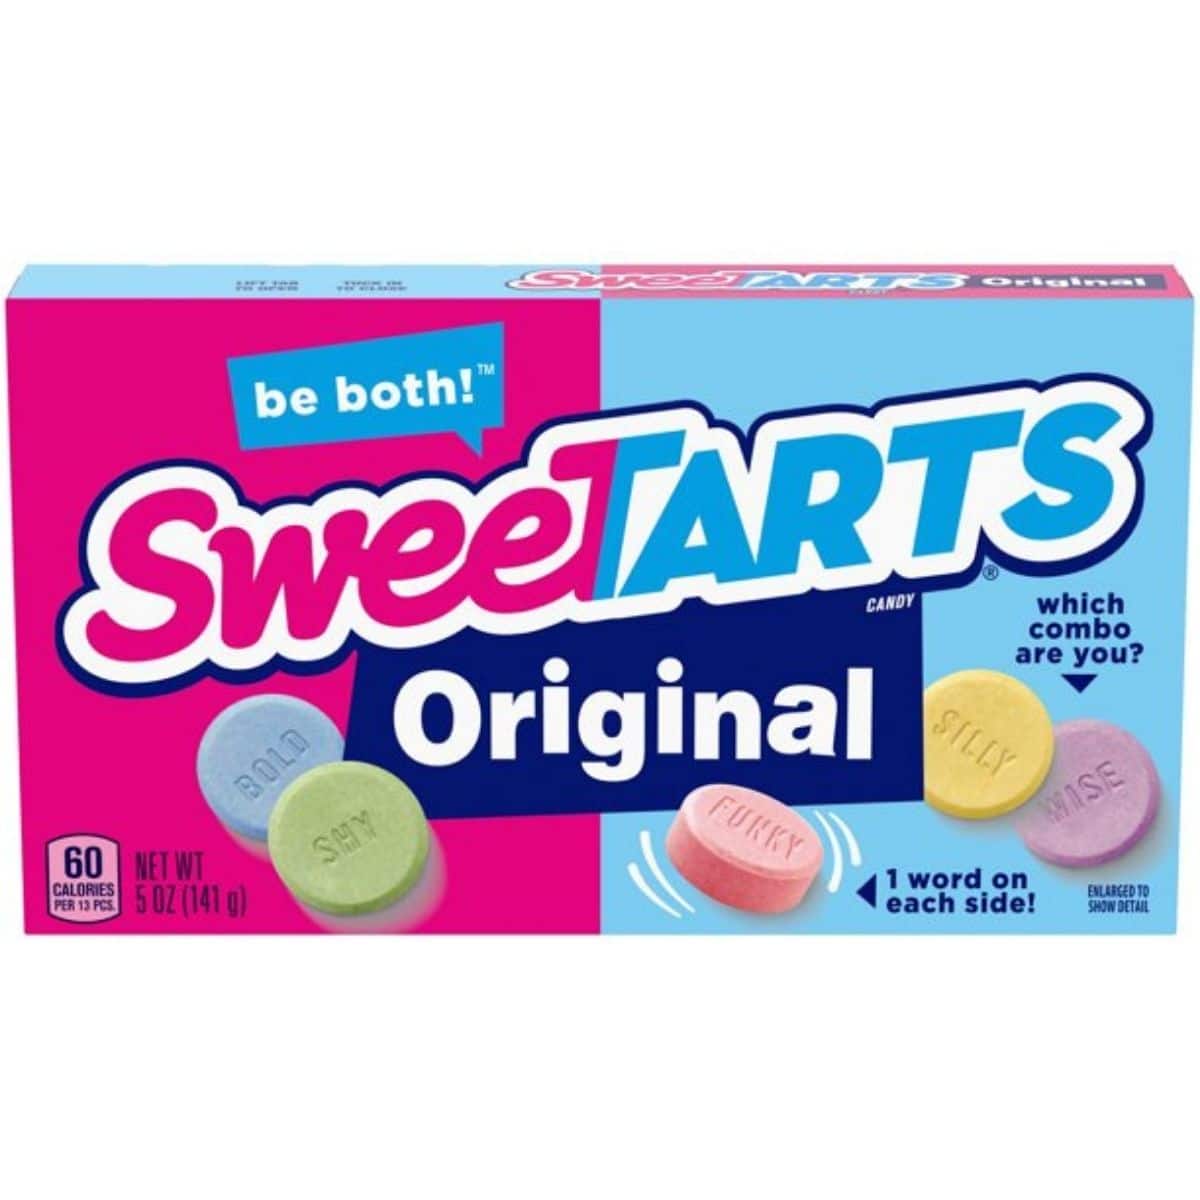 A box of original Sweetarts.